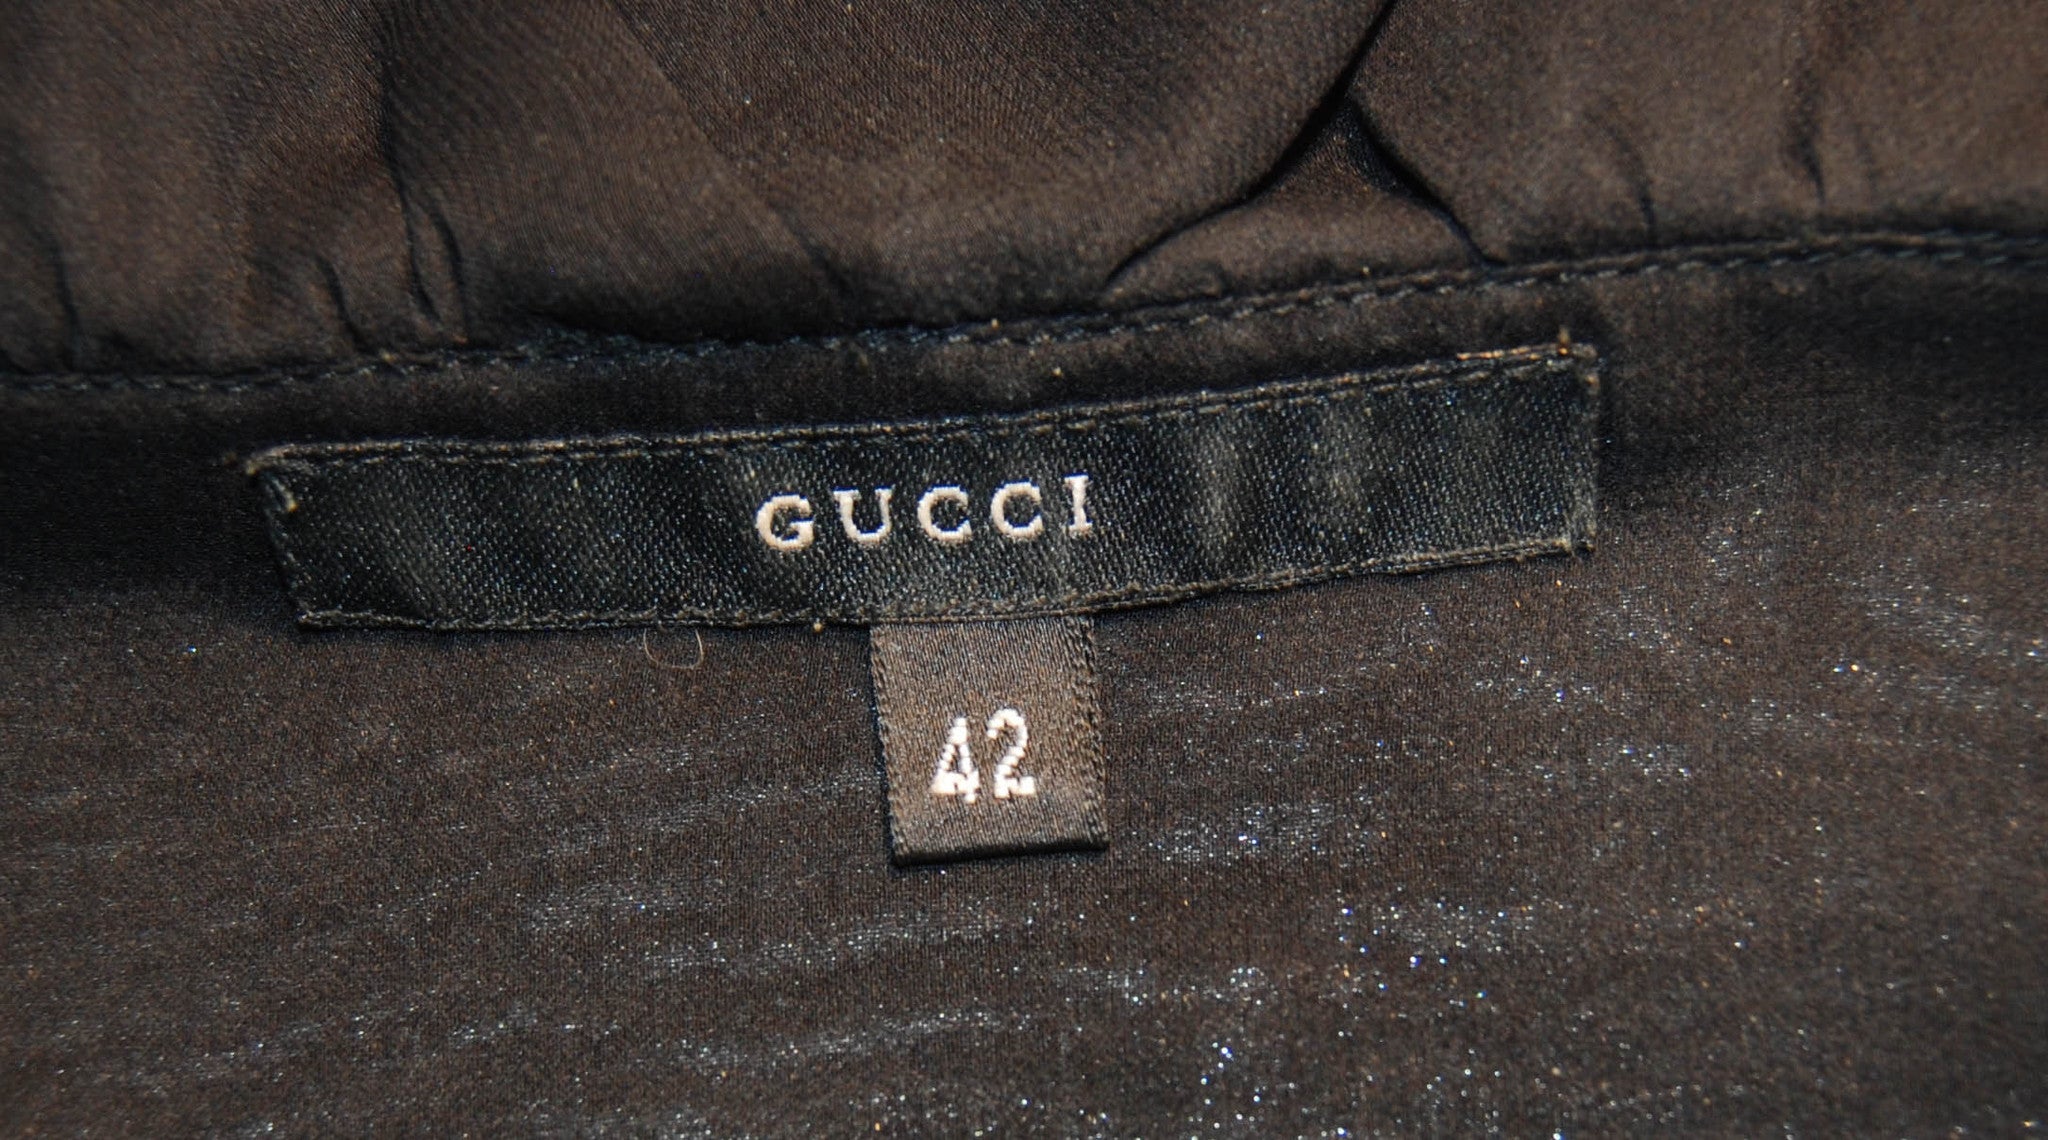 Tom Ford Gucci Leather Skirt - refashioner